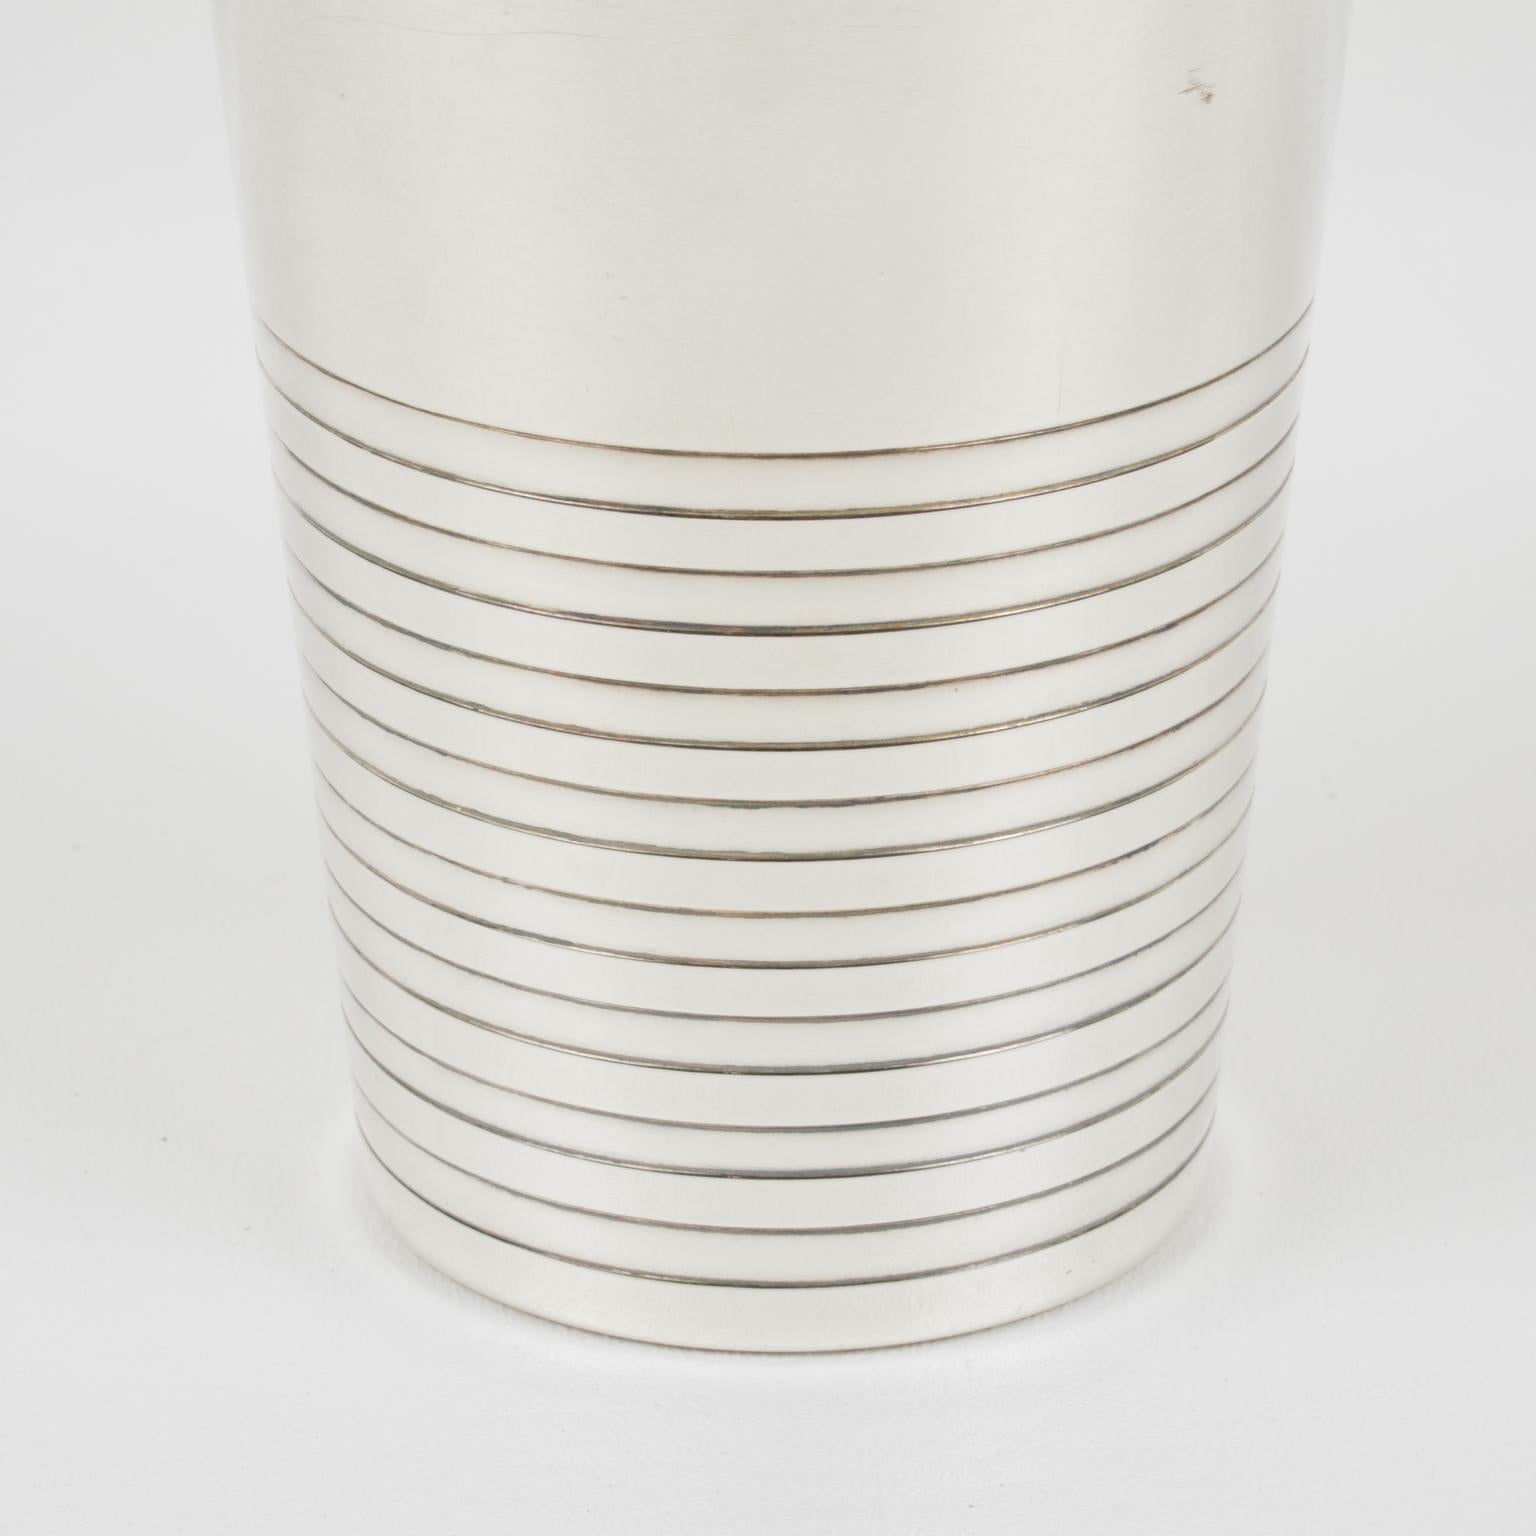 Art Deco Silver Plate Cocktail Shaker by Silversmith Saint Medard France 1